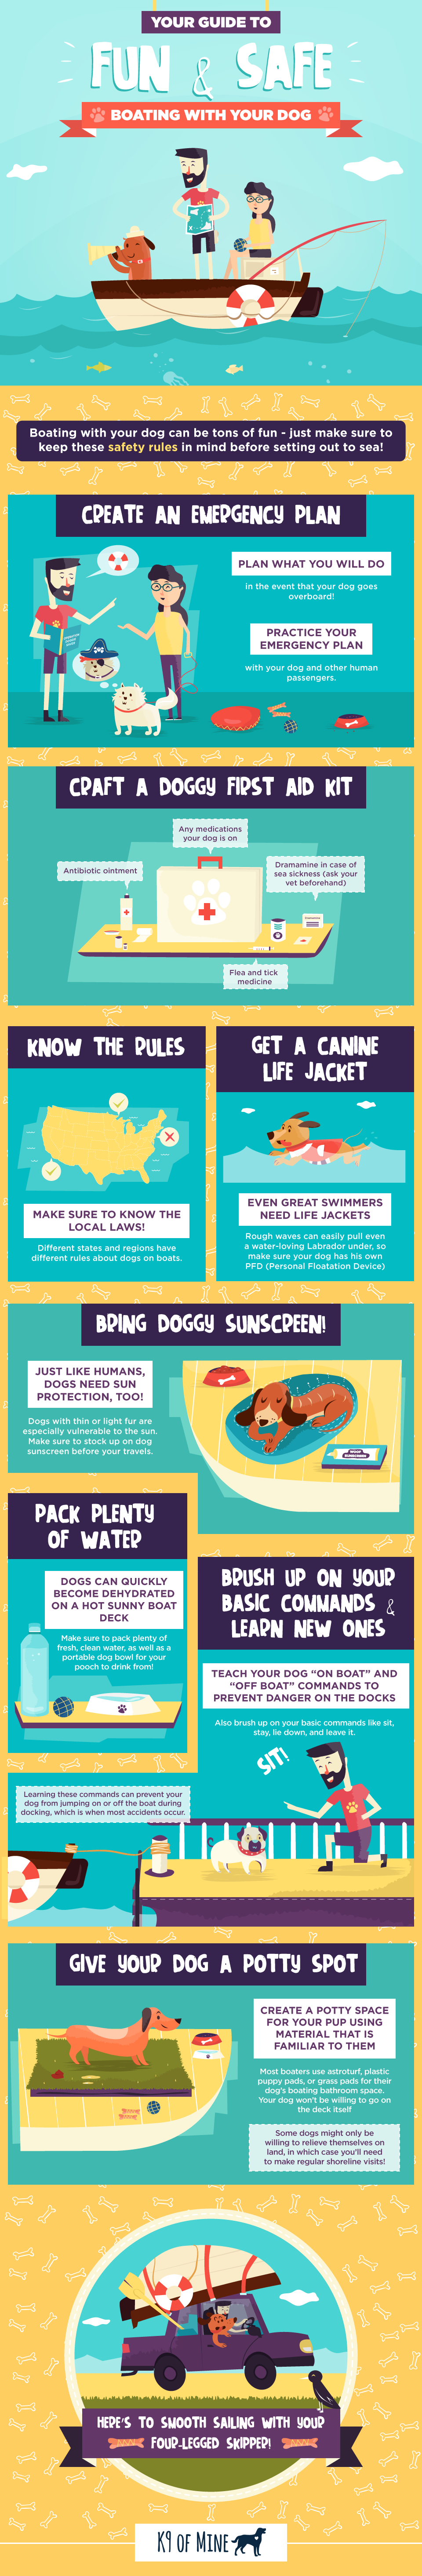 dog-boating-safety-infographic-2